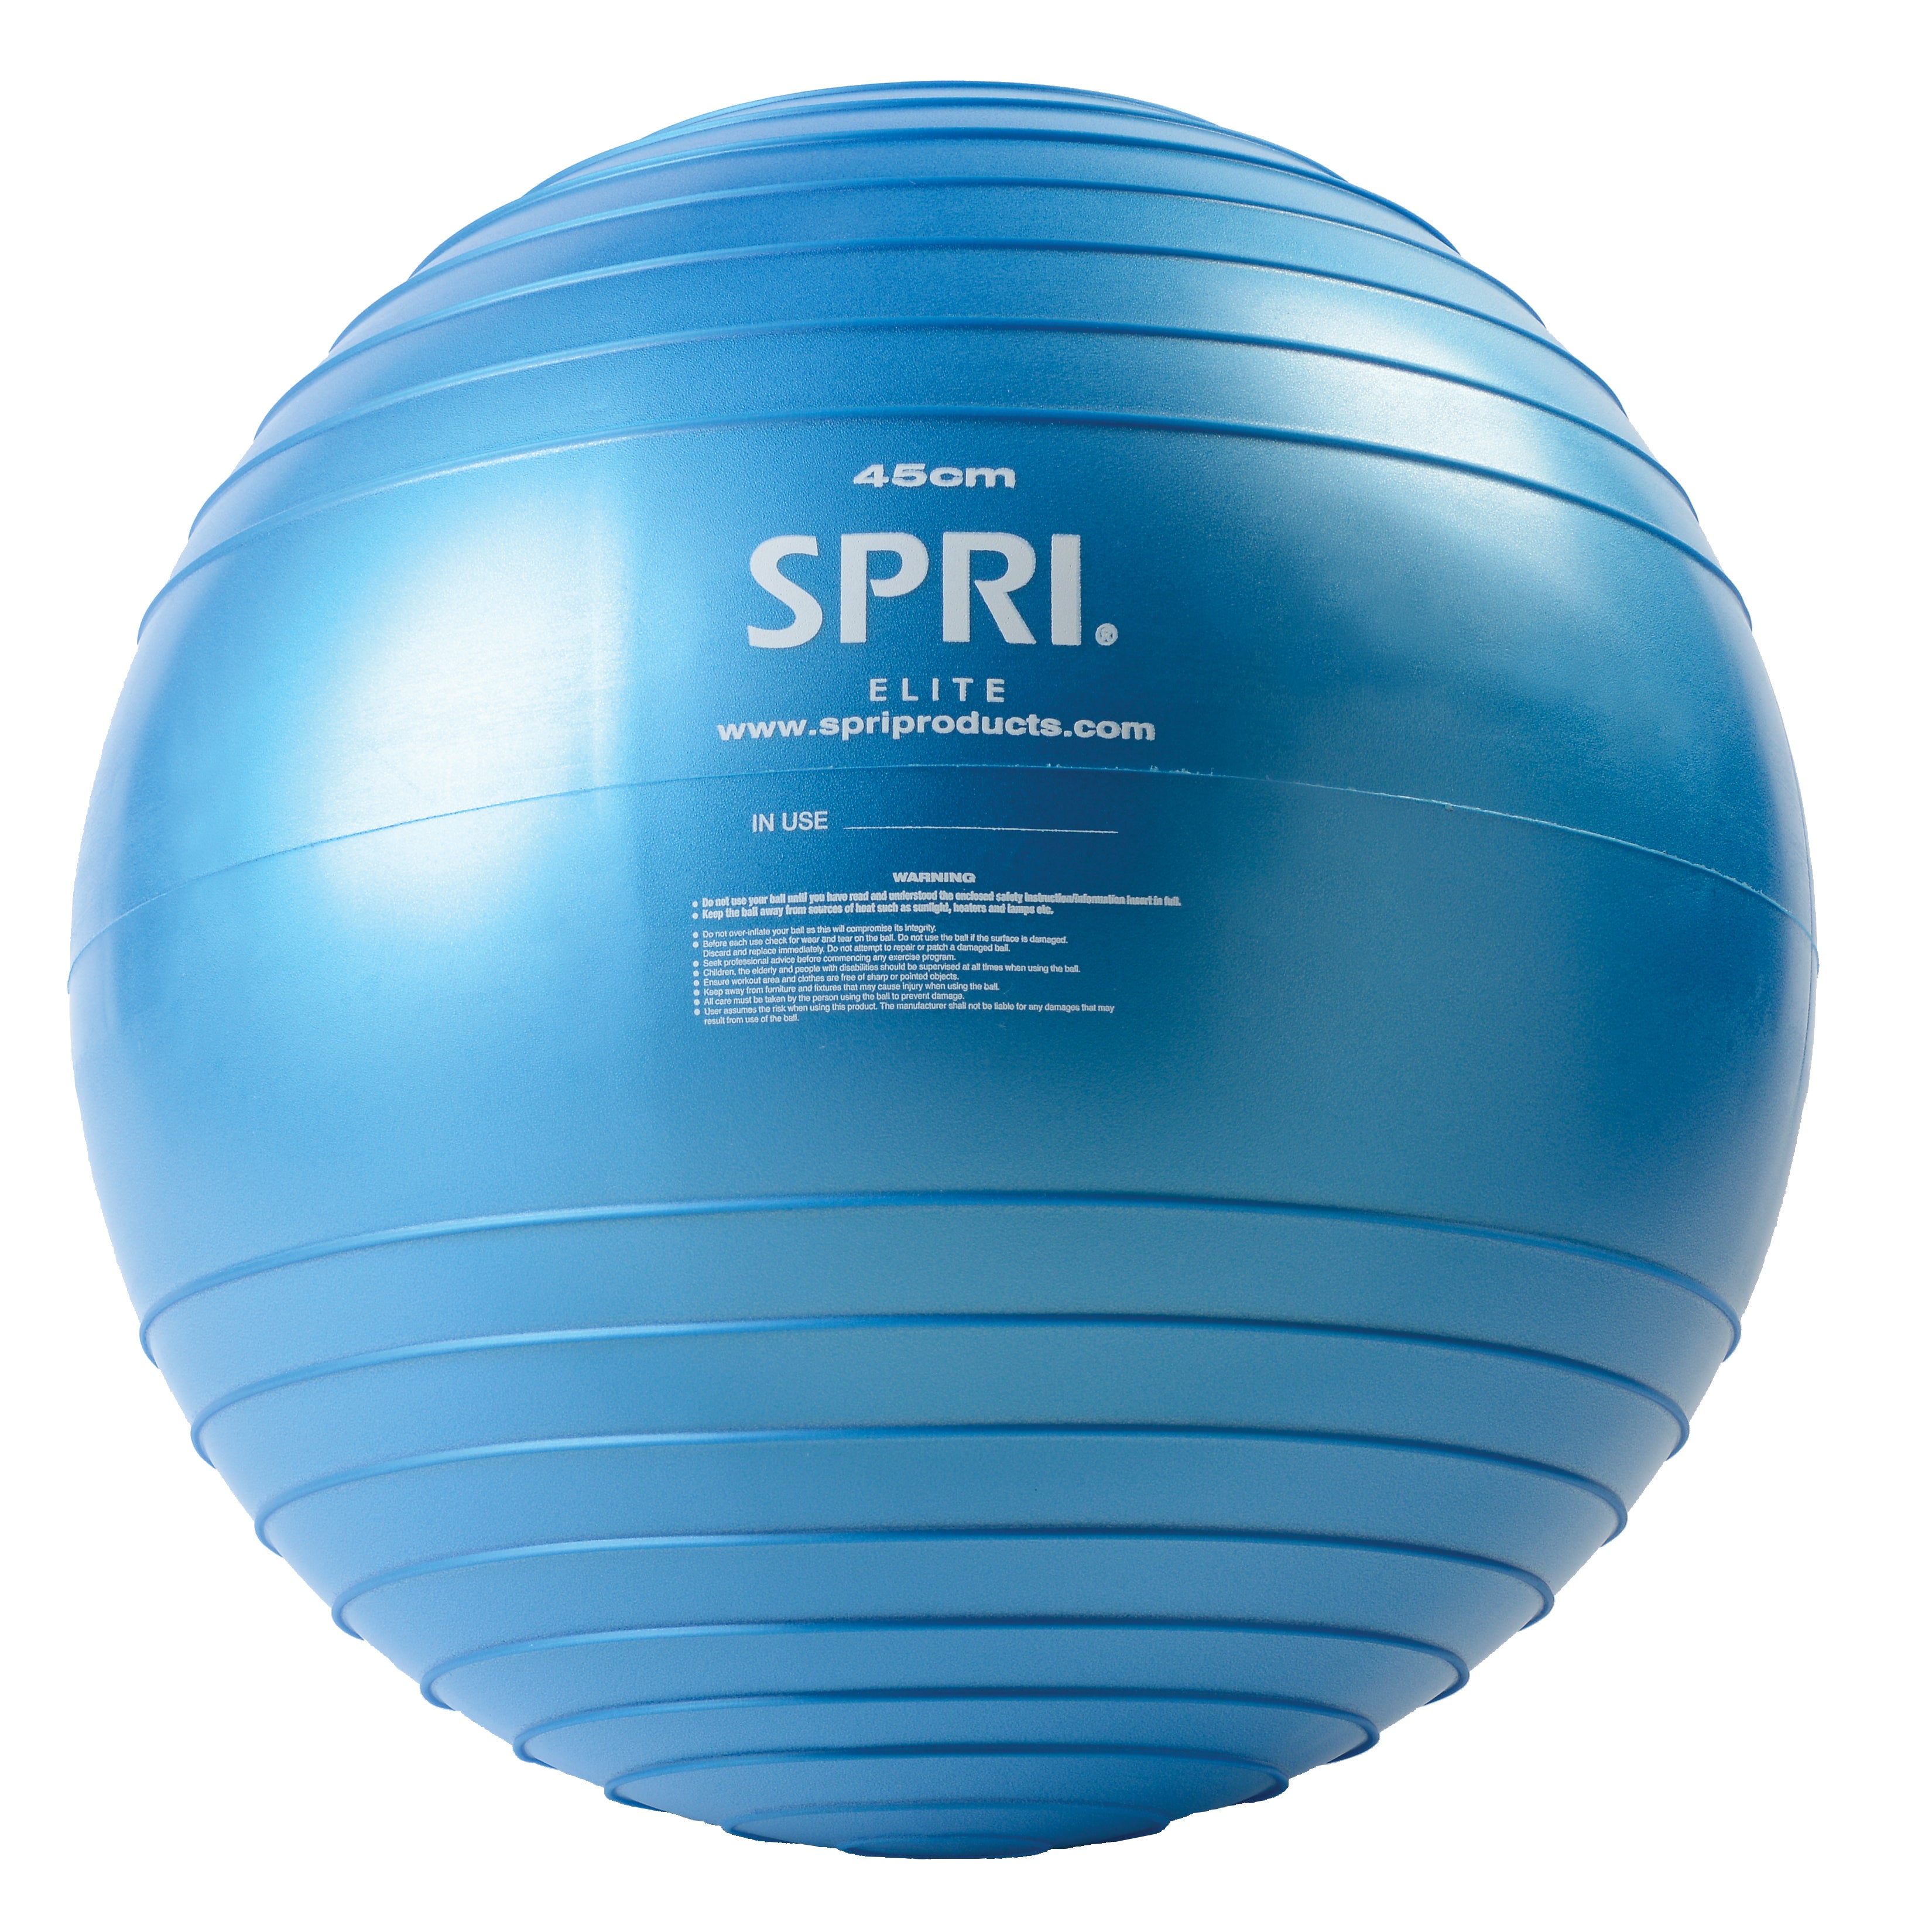 exercise equipment ball